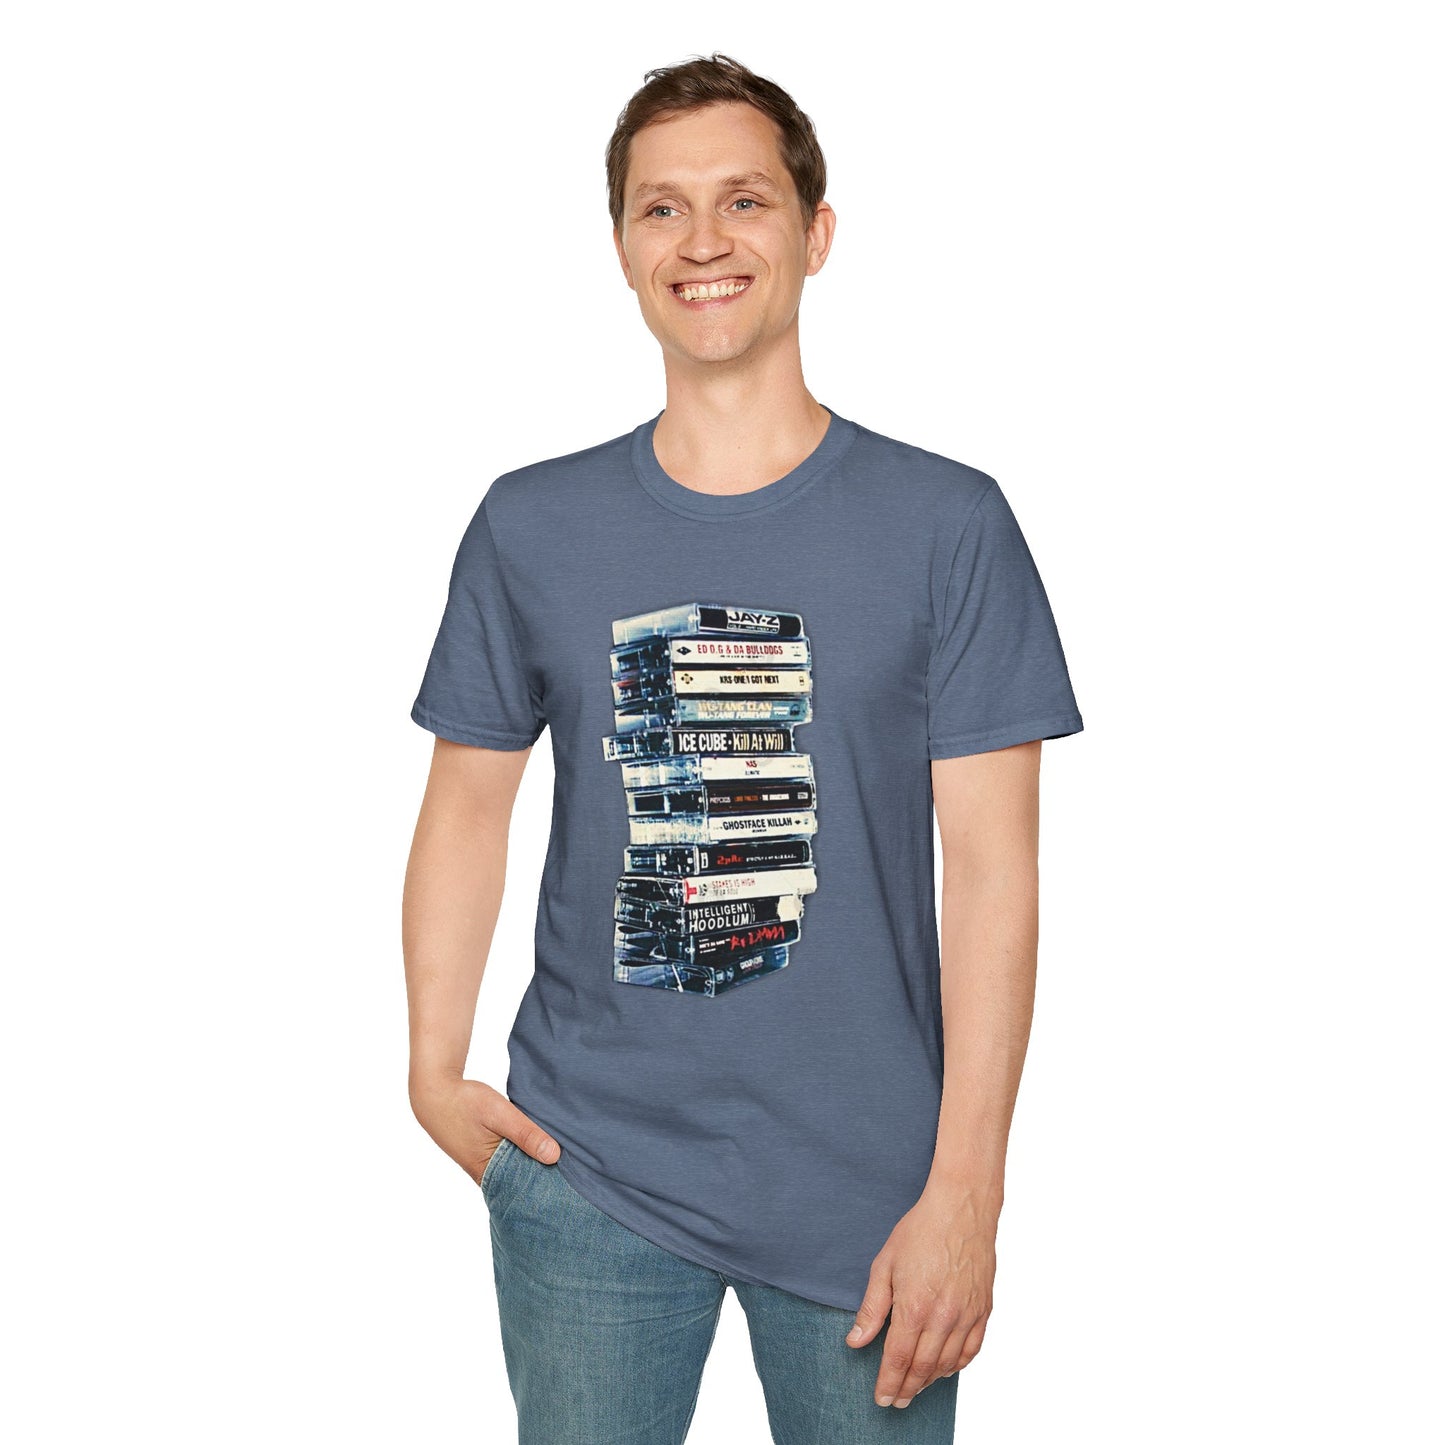 Cassettes T-Shirt